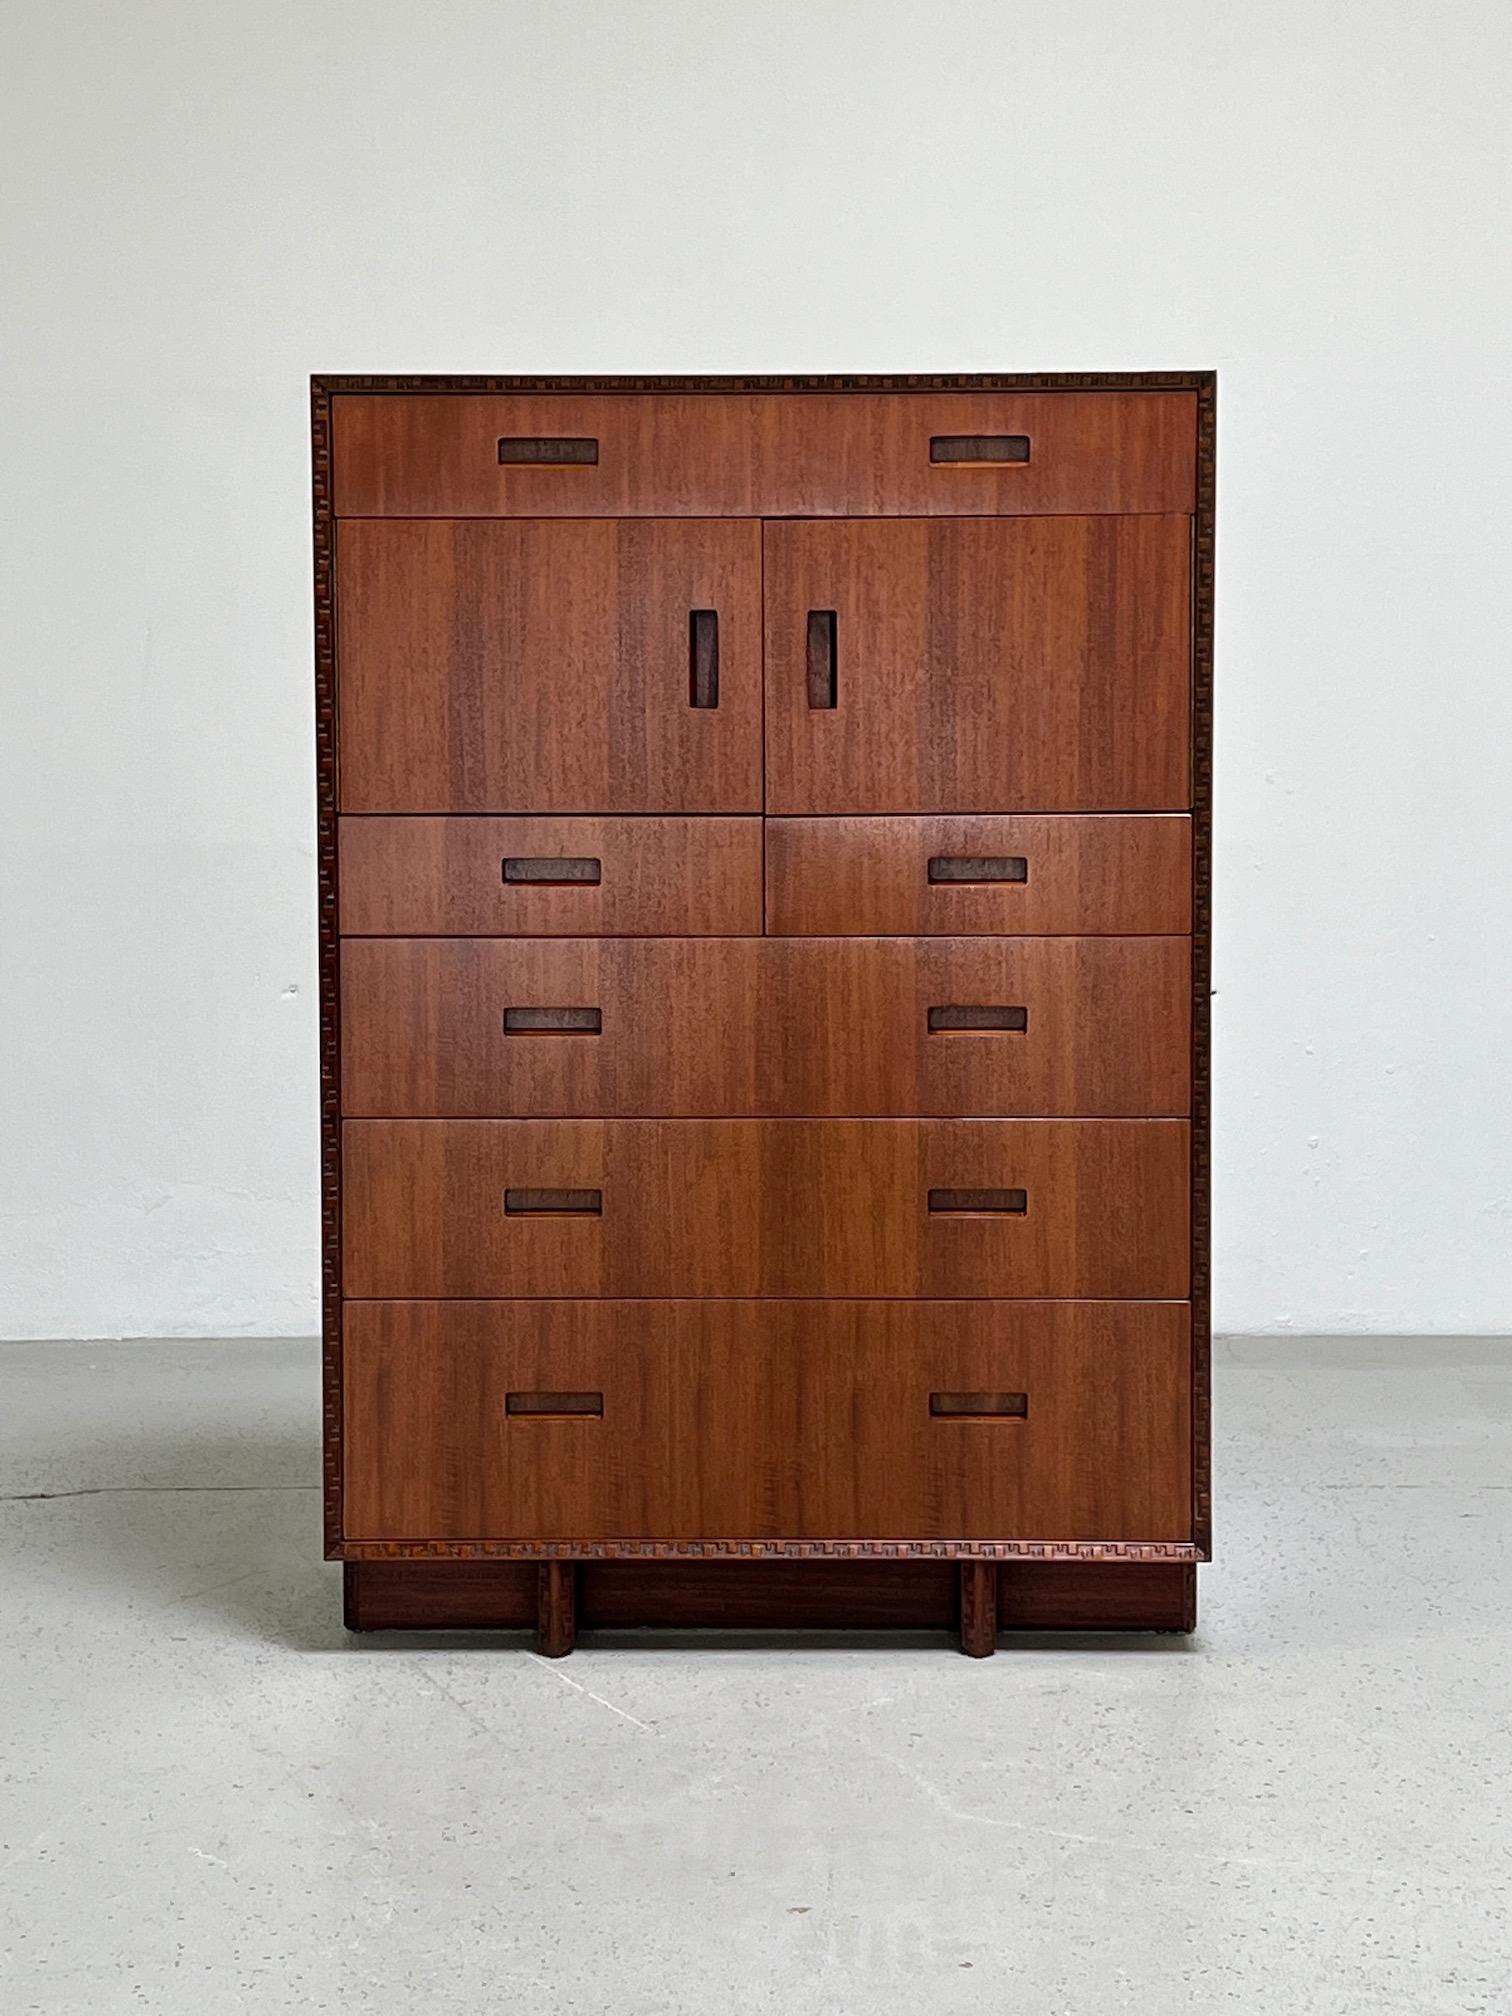 A mahogany chest designed by Frank Lloyd Wright for Henredon.